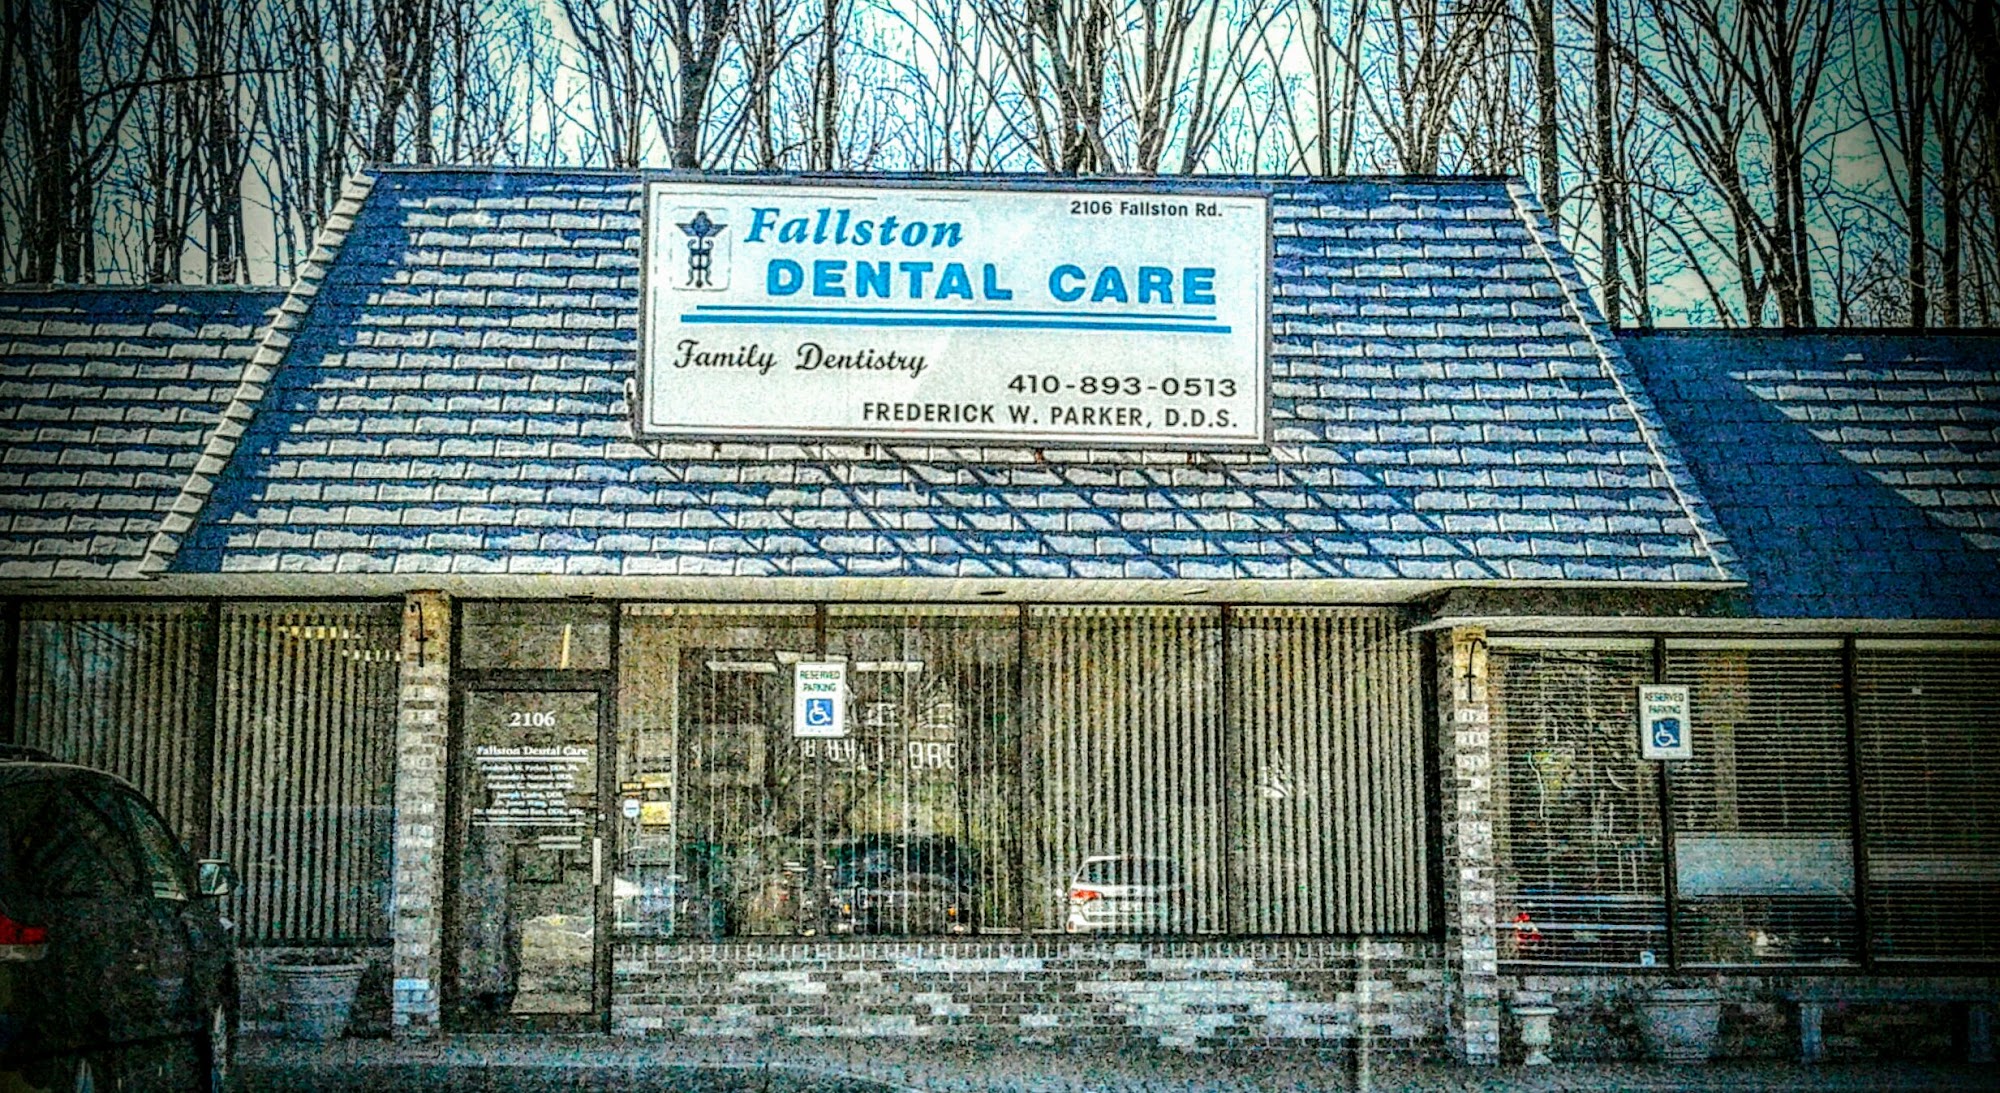 Fallston Dental Care